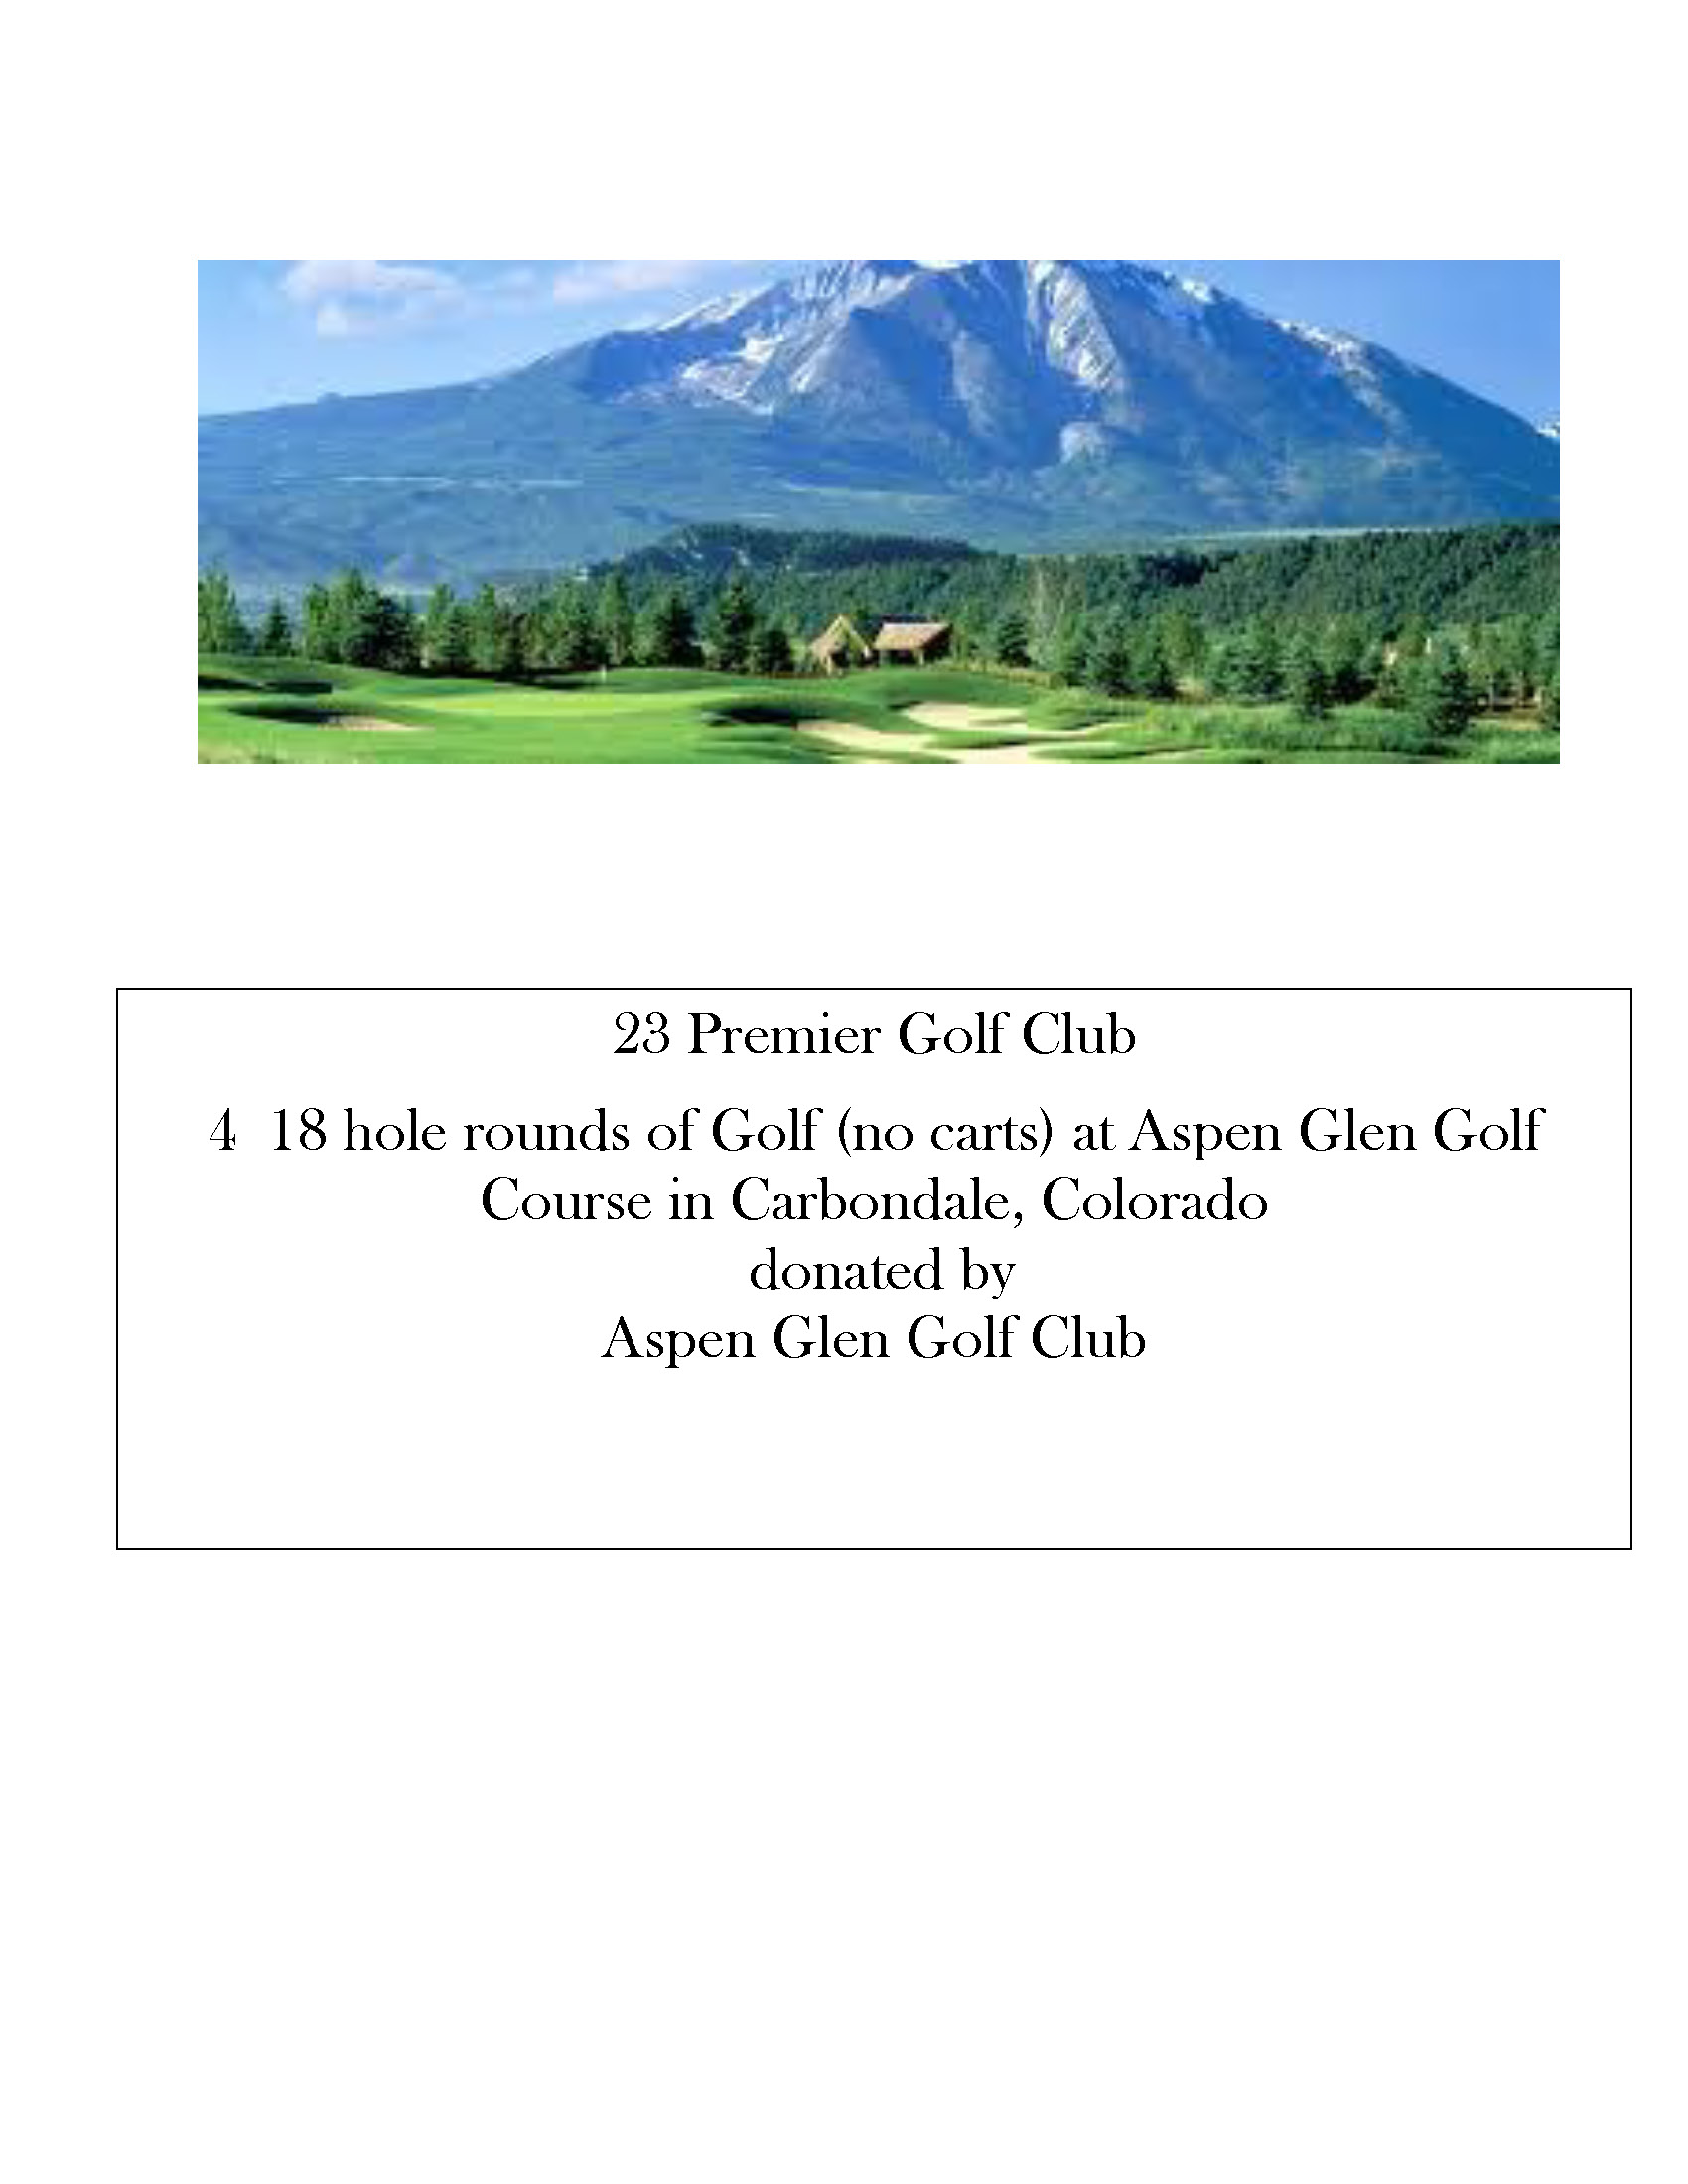 23-Premier-Golf-Club-docx-5dc43b0ad5e31